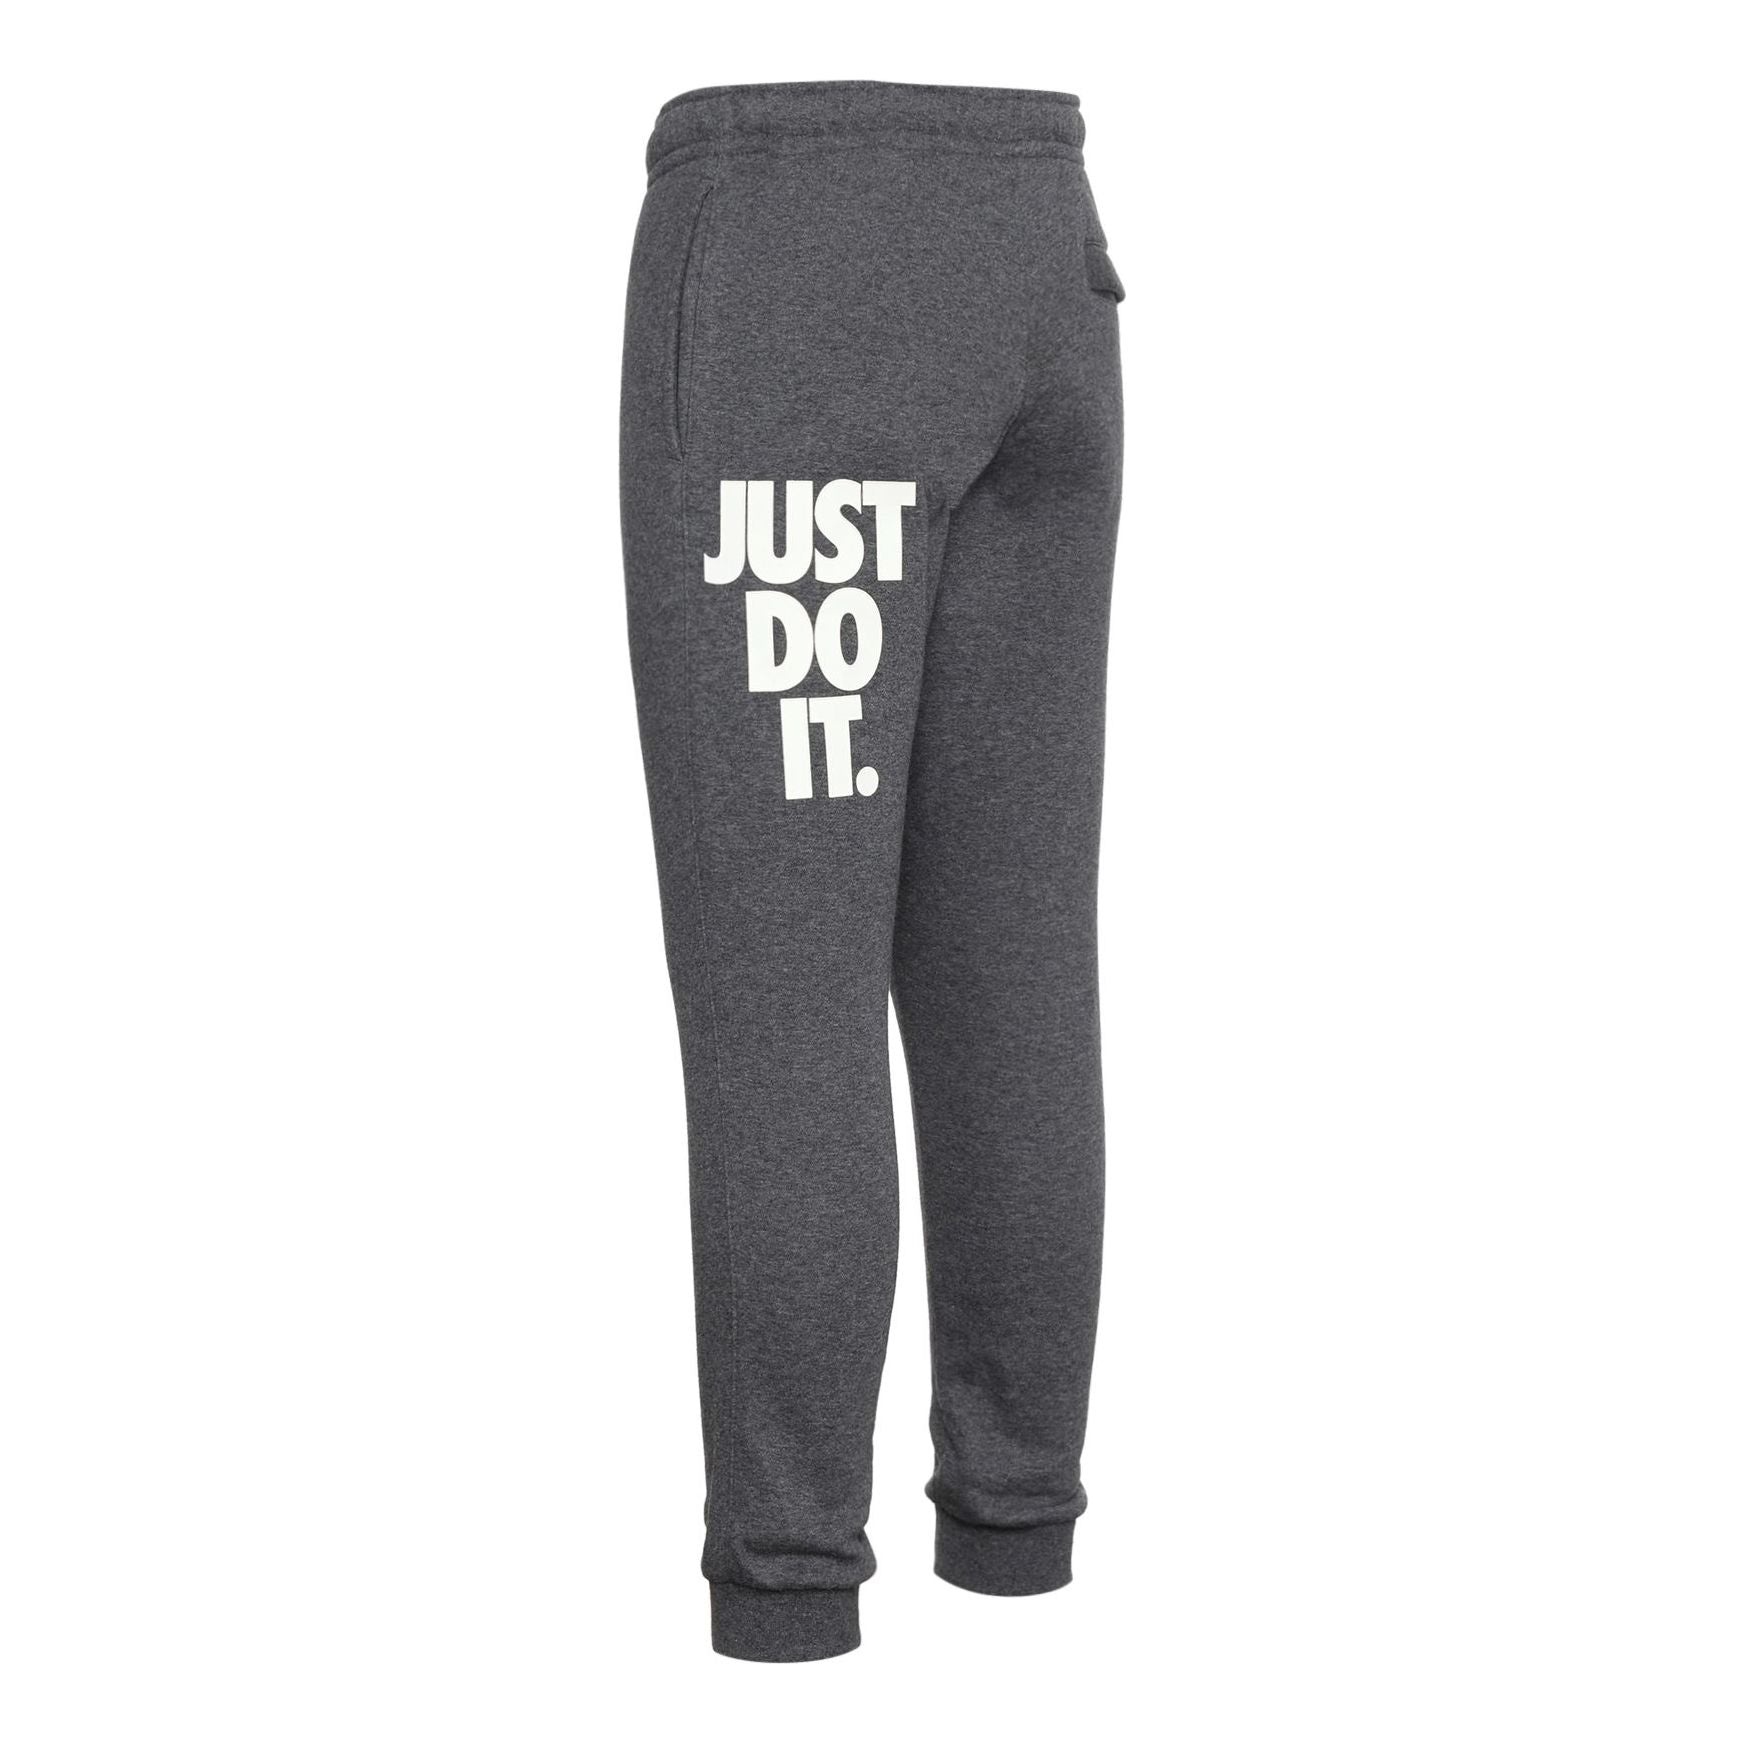 Nike Alphabet Fleece Lined Stay Warm Knit Sports Pants Gray AT5266-071 - 2